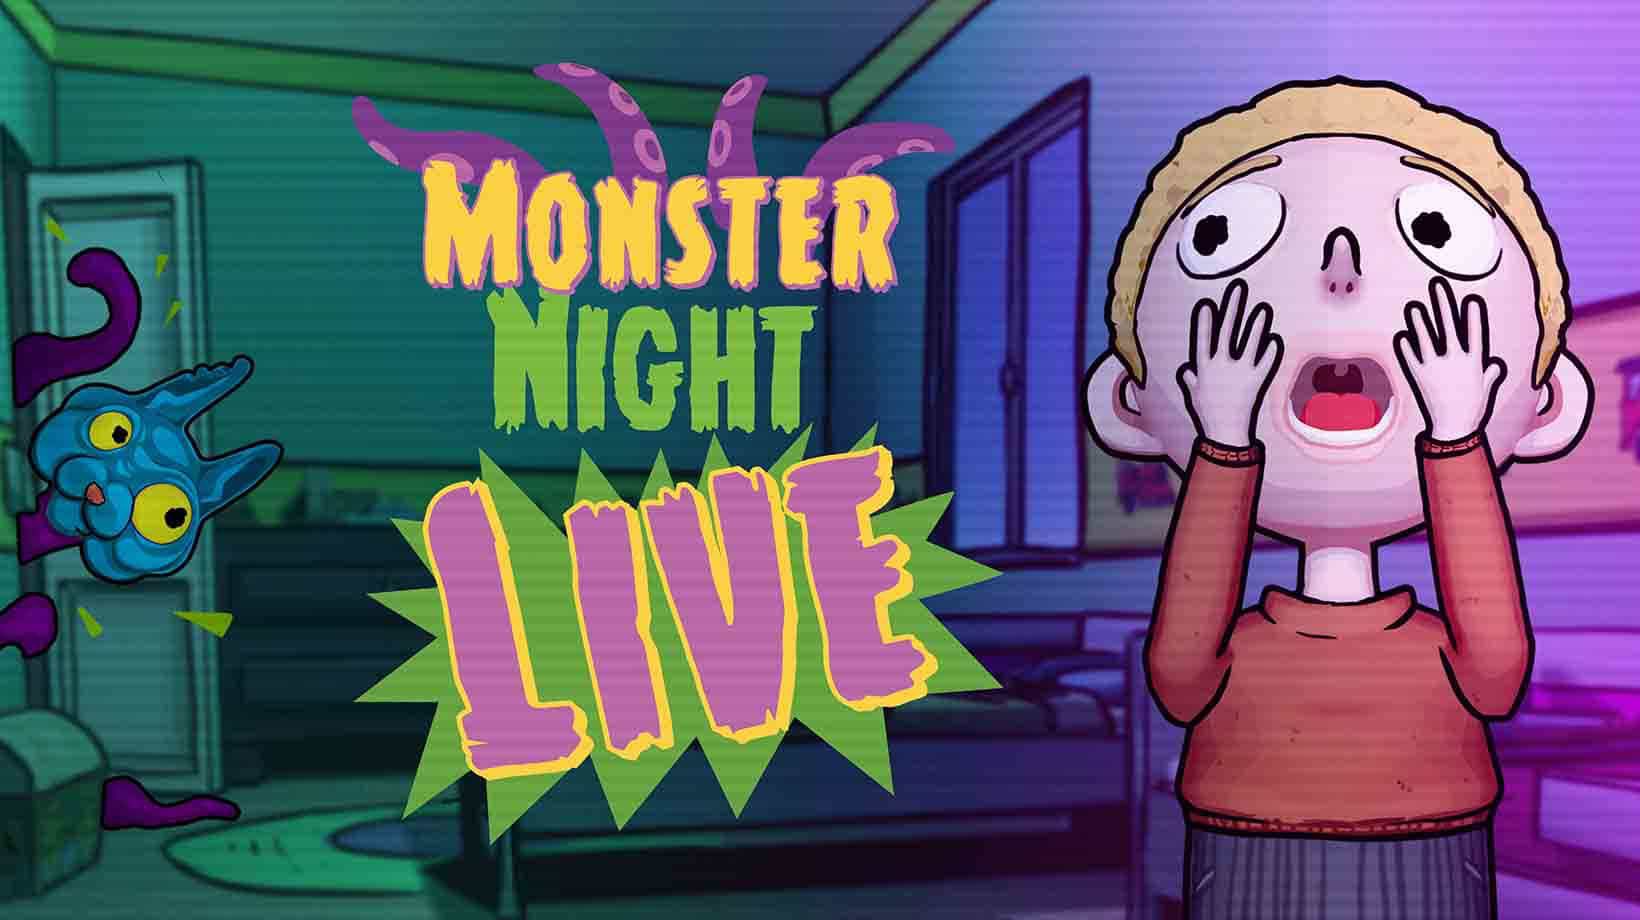 Monster night live